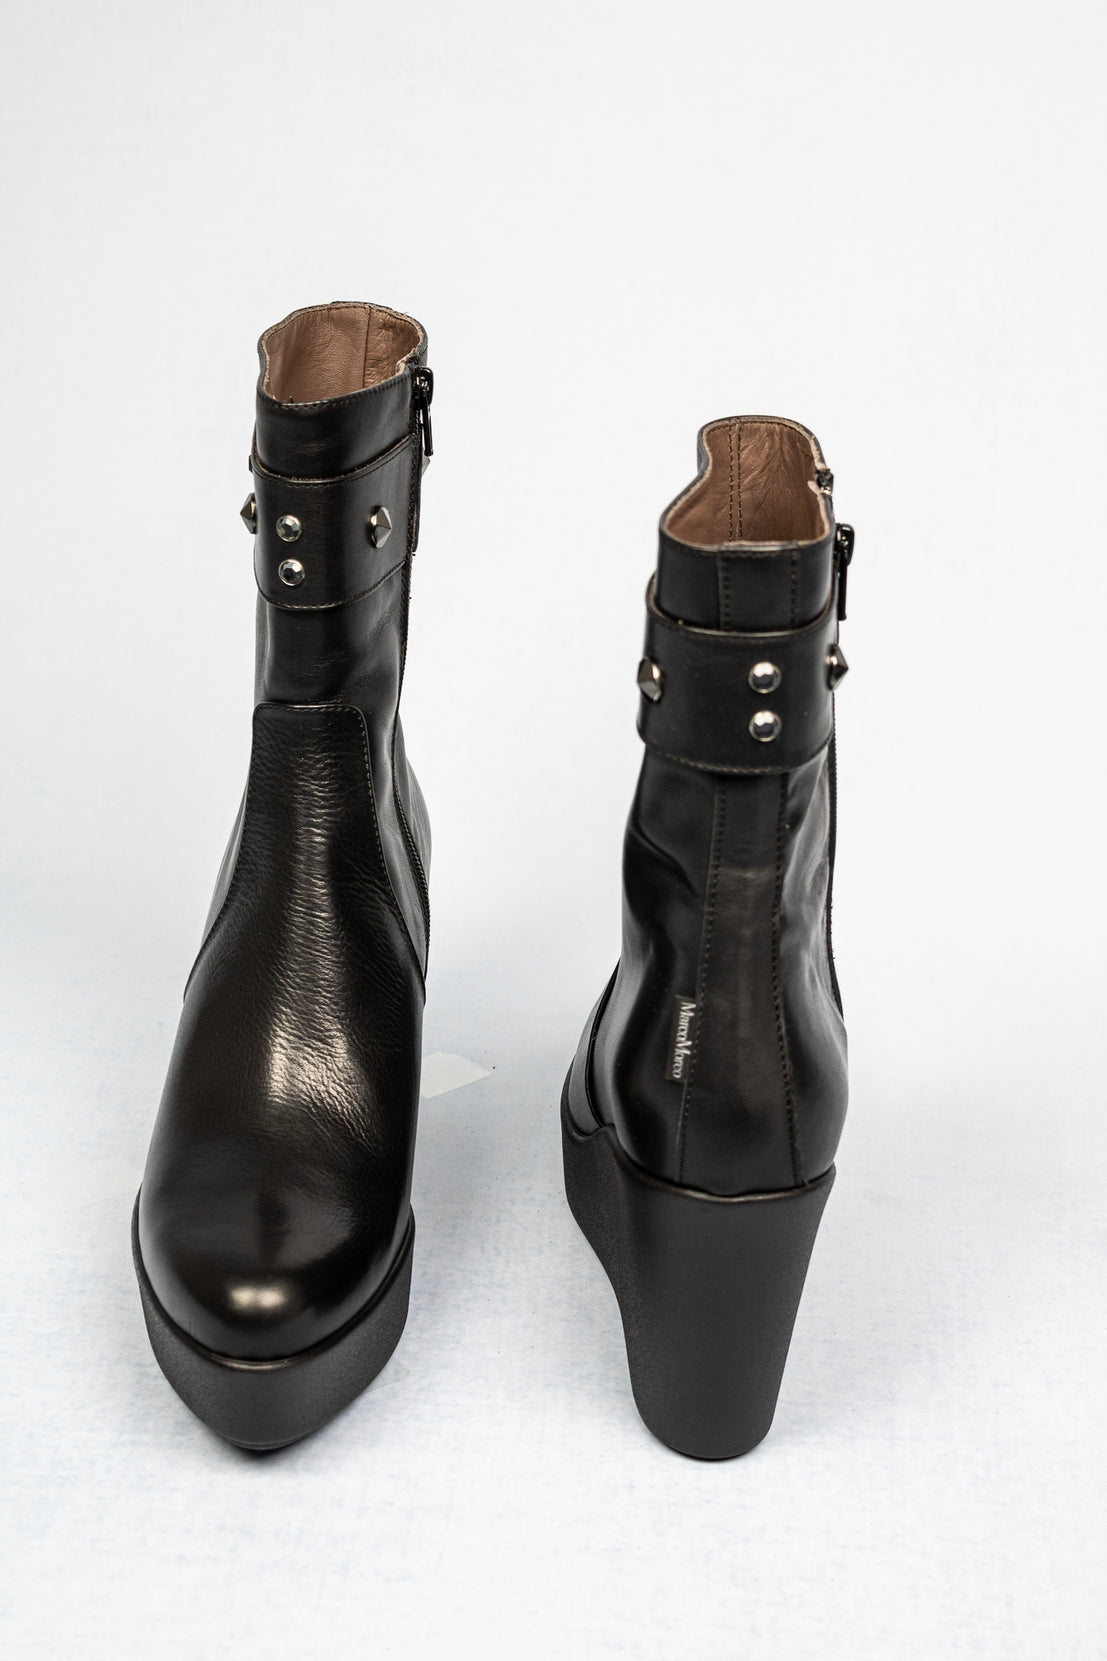 black wedge boots ireland